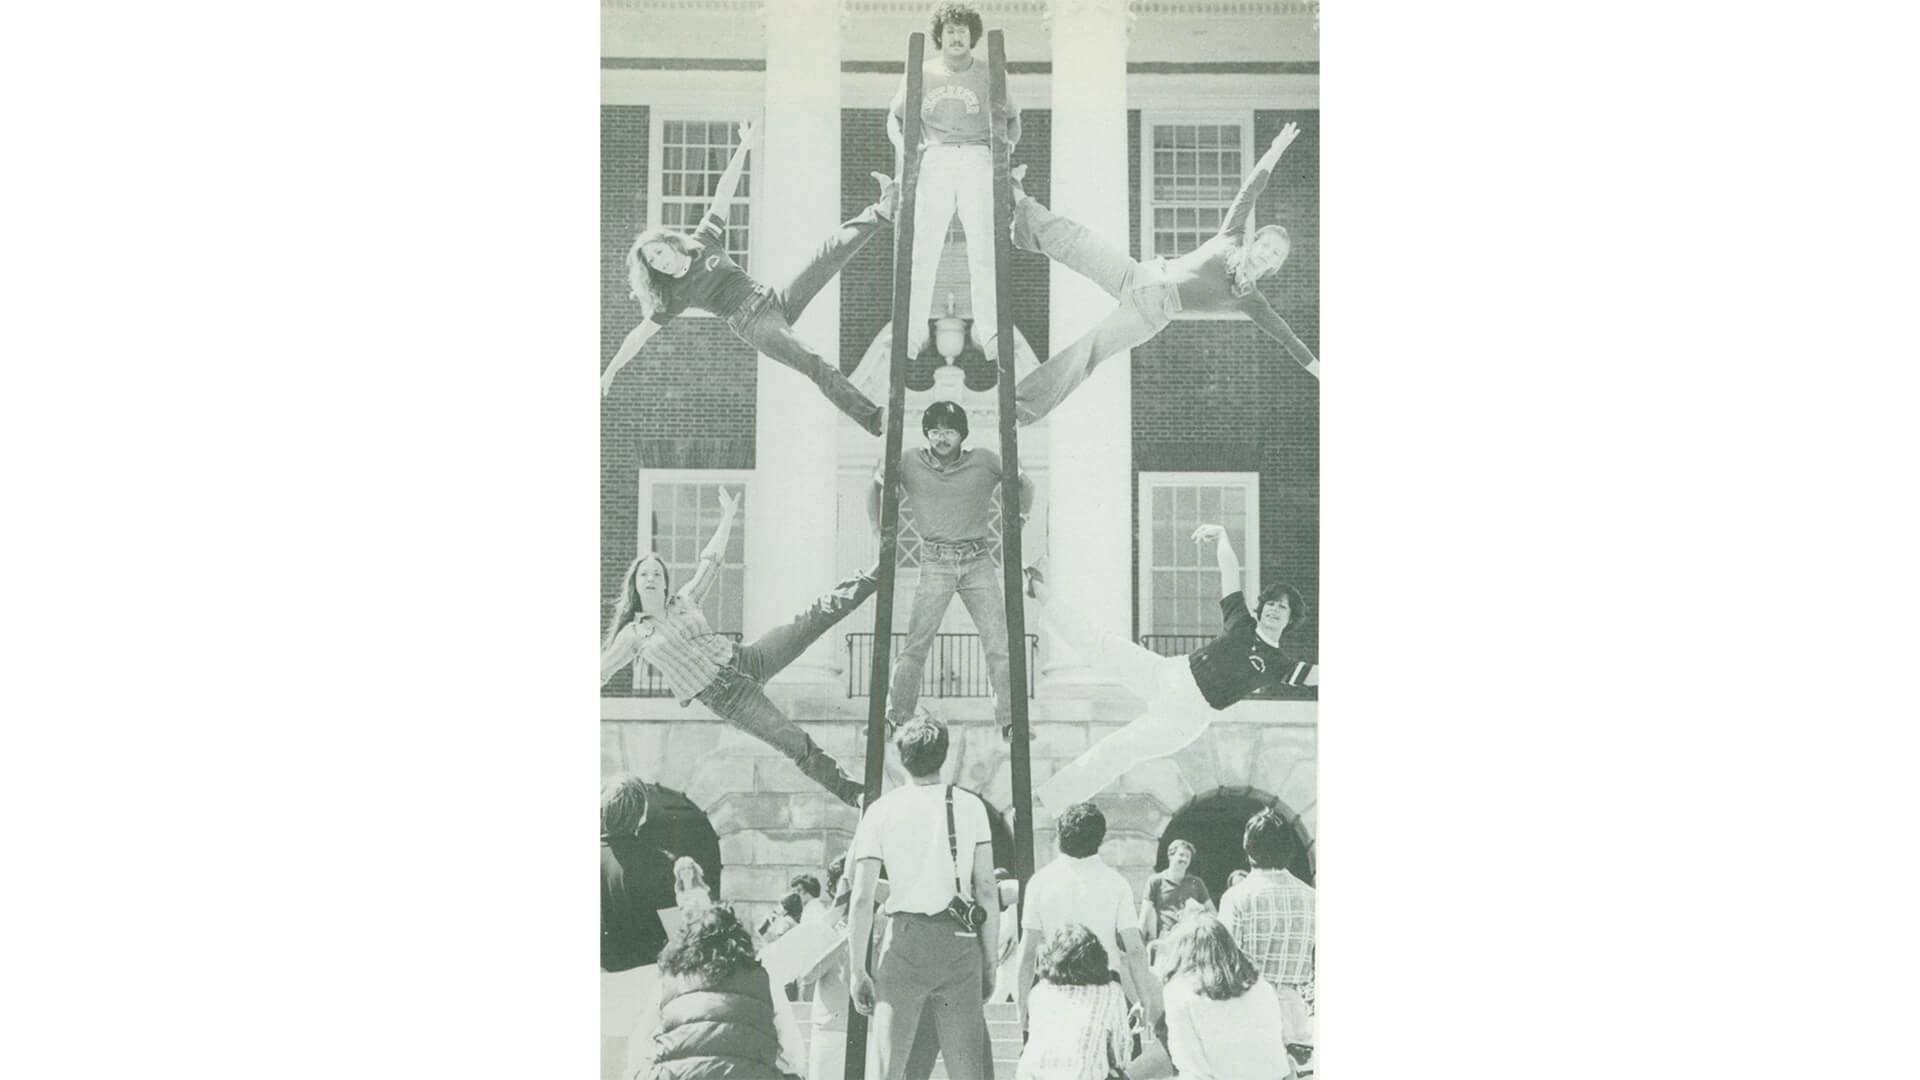 Gymkana members perform on stilts on McKeldin Mall